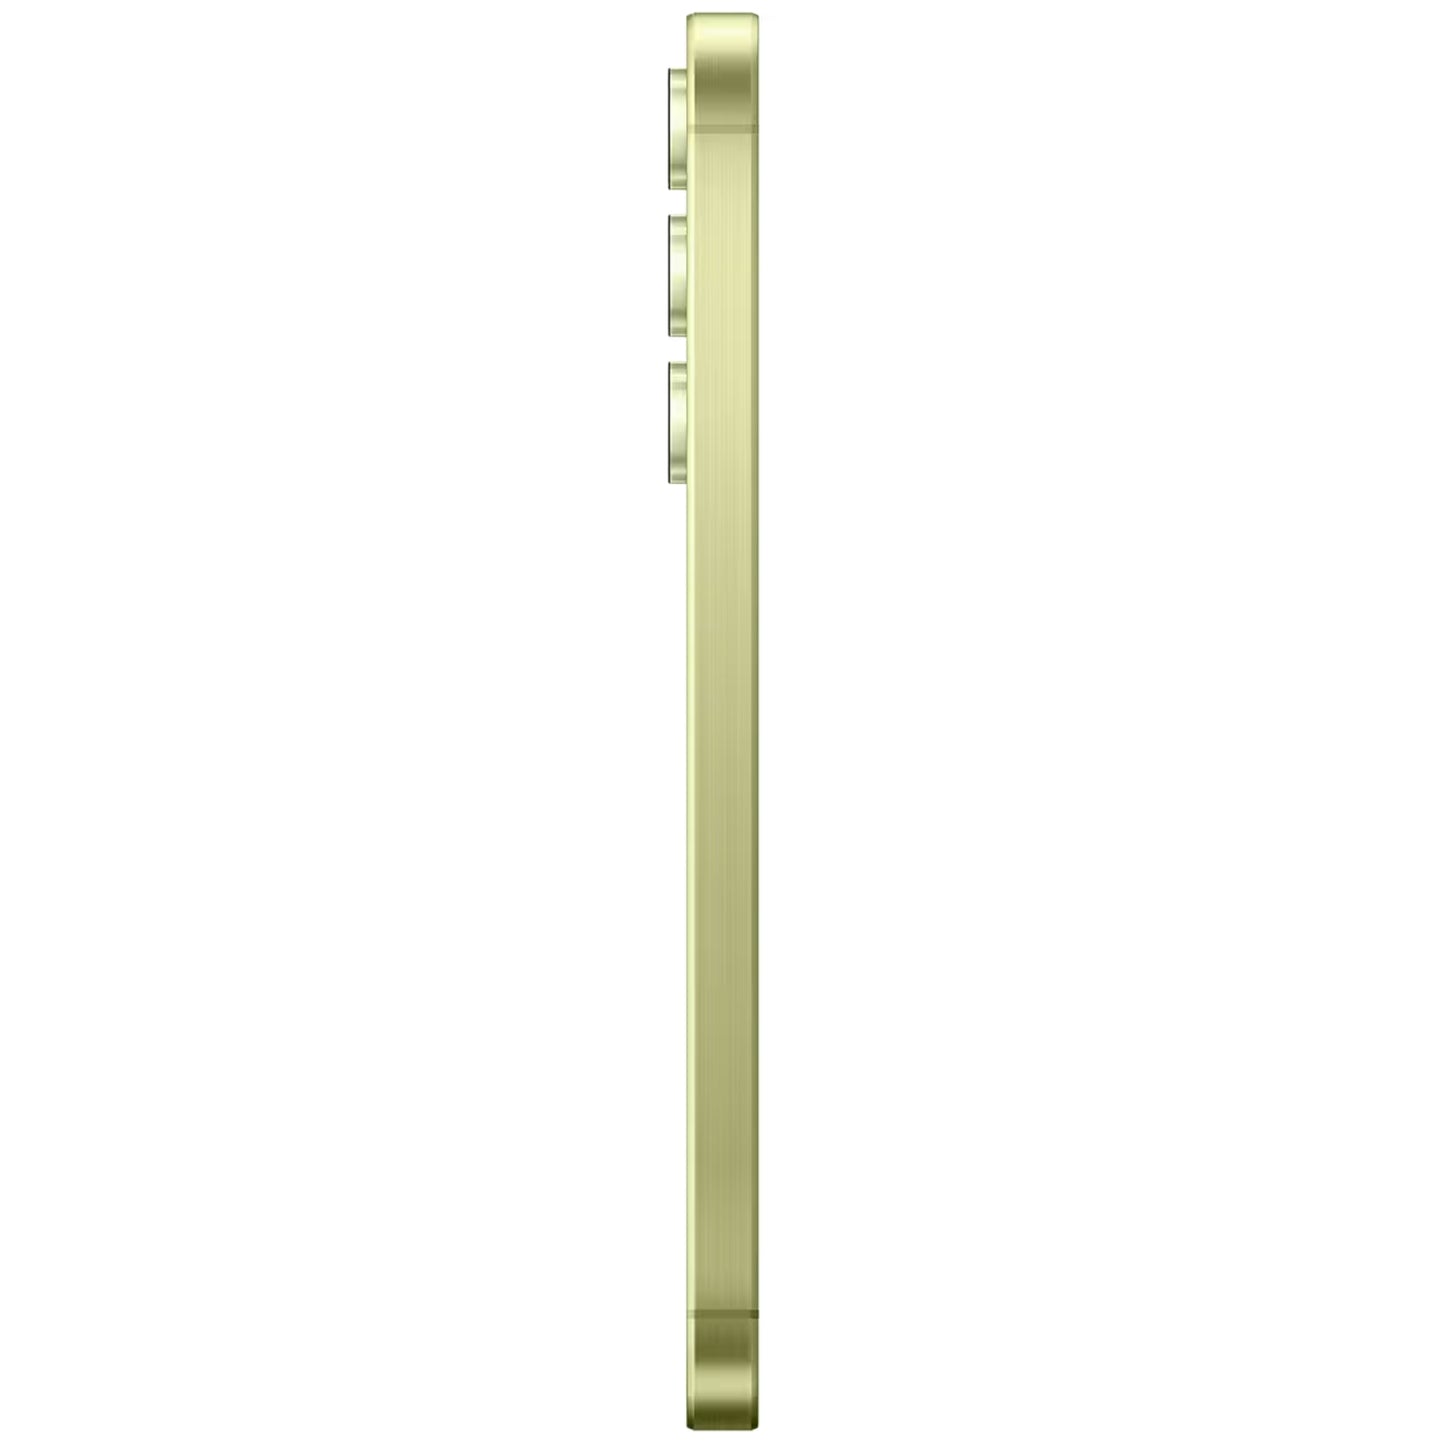 Samsung Galaxy A55 dual Nano sim A5560 5G (12GB ram)